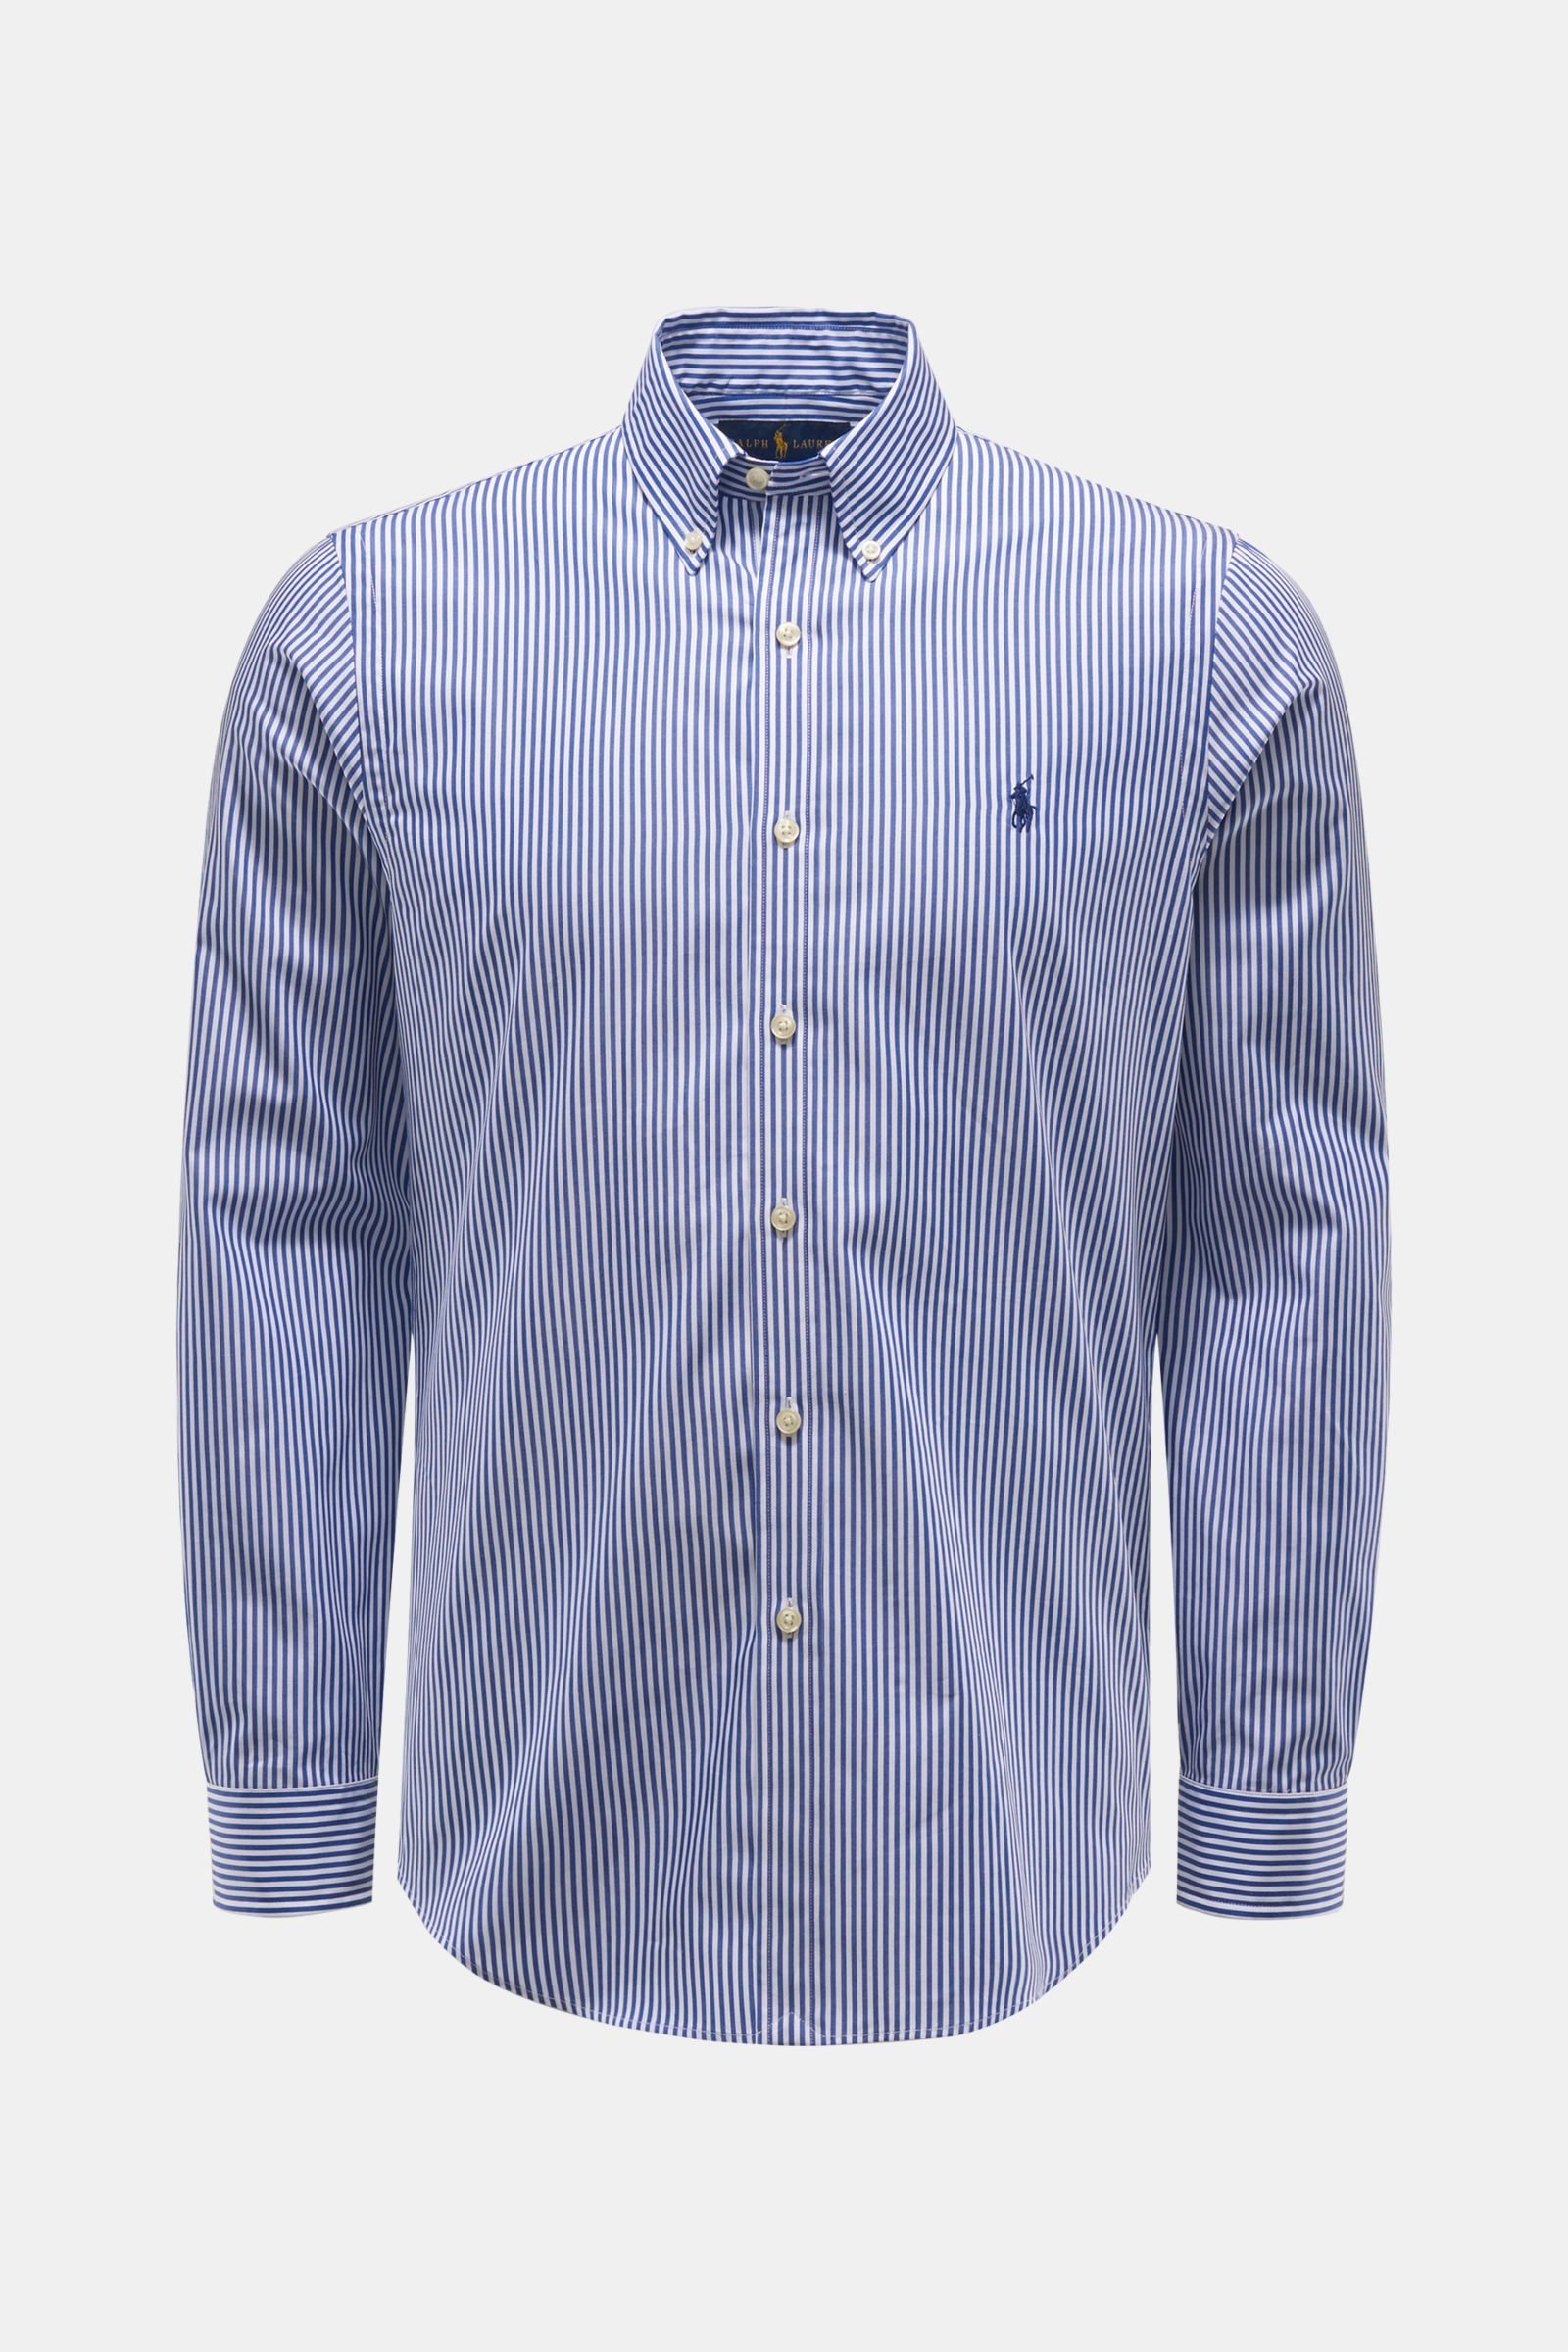 Casual shirt button-down collar navy/white striped